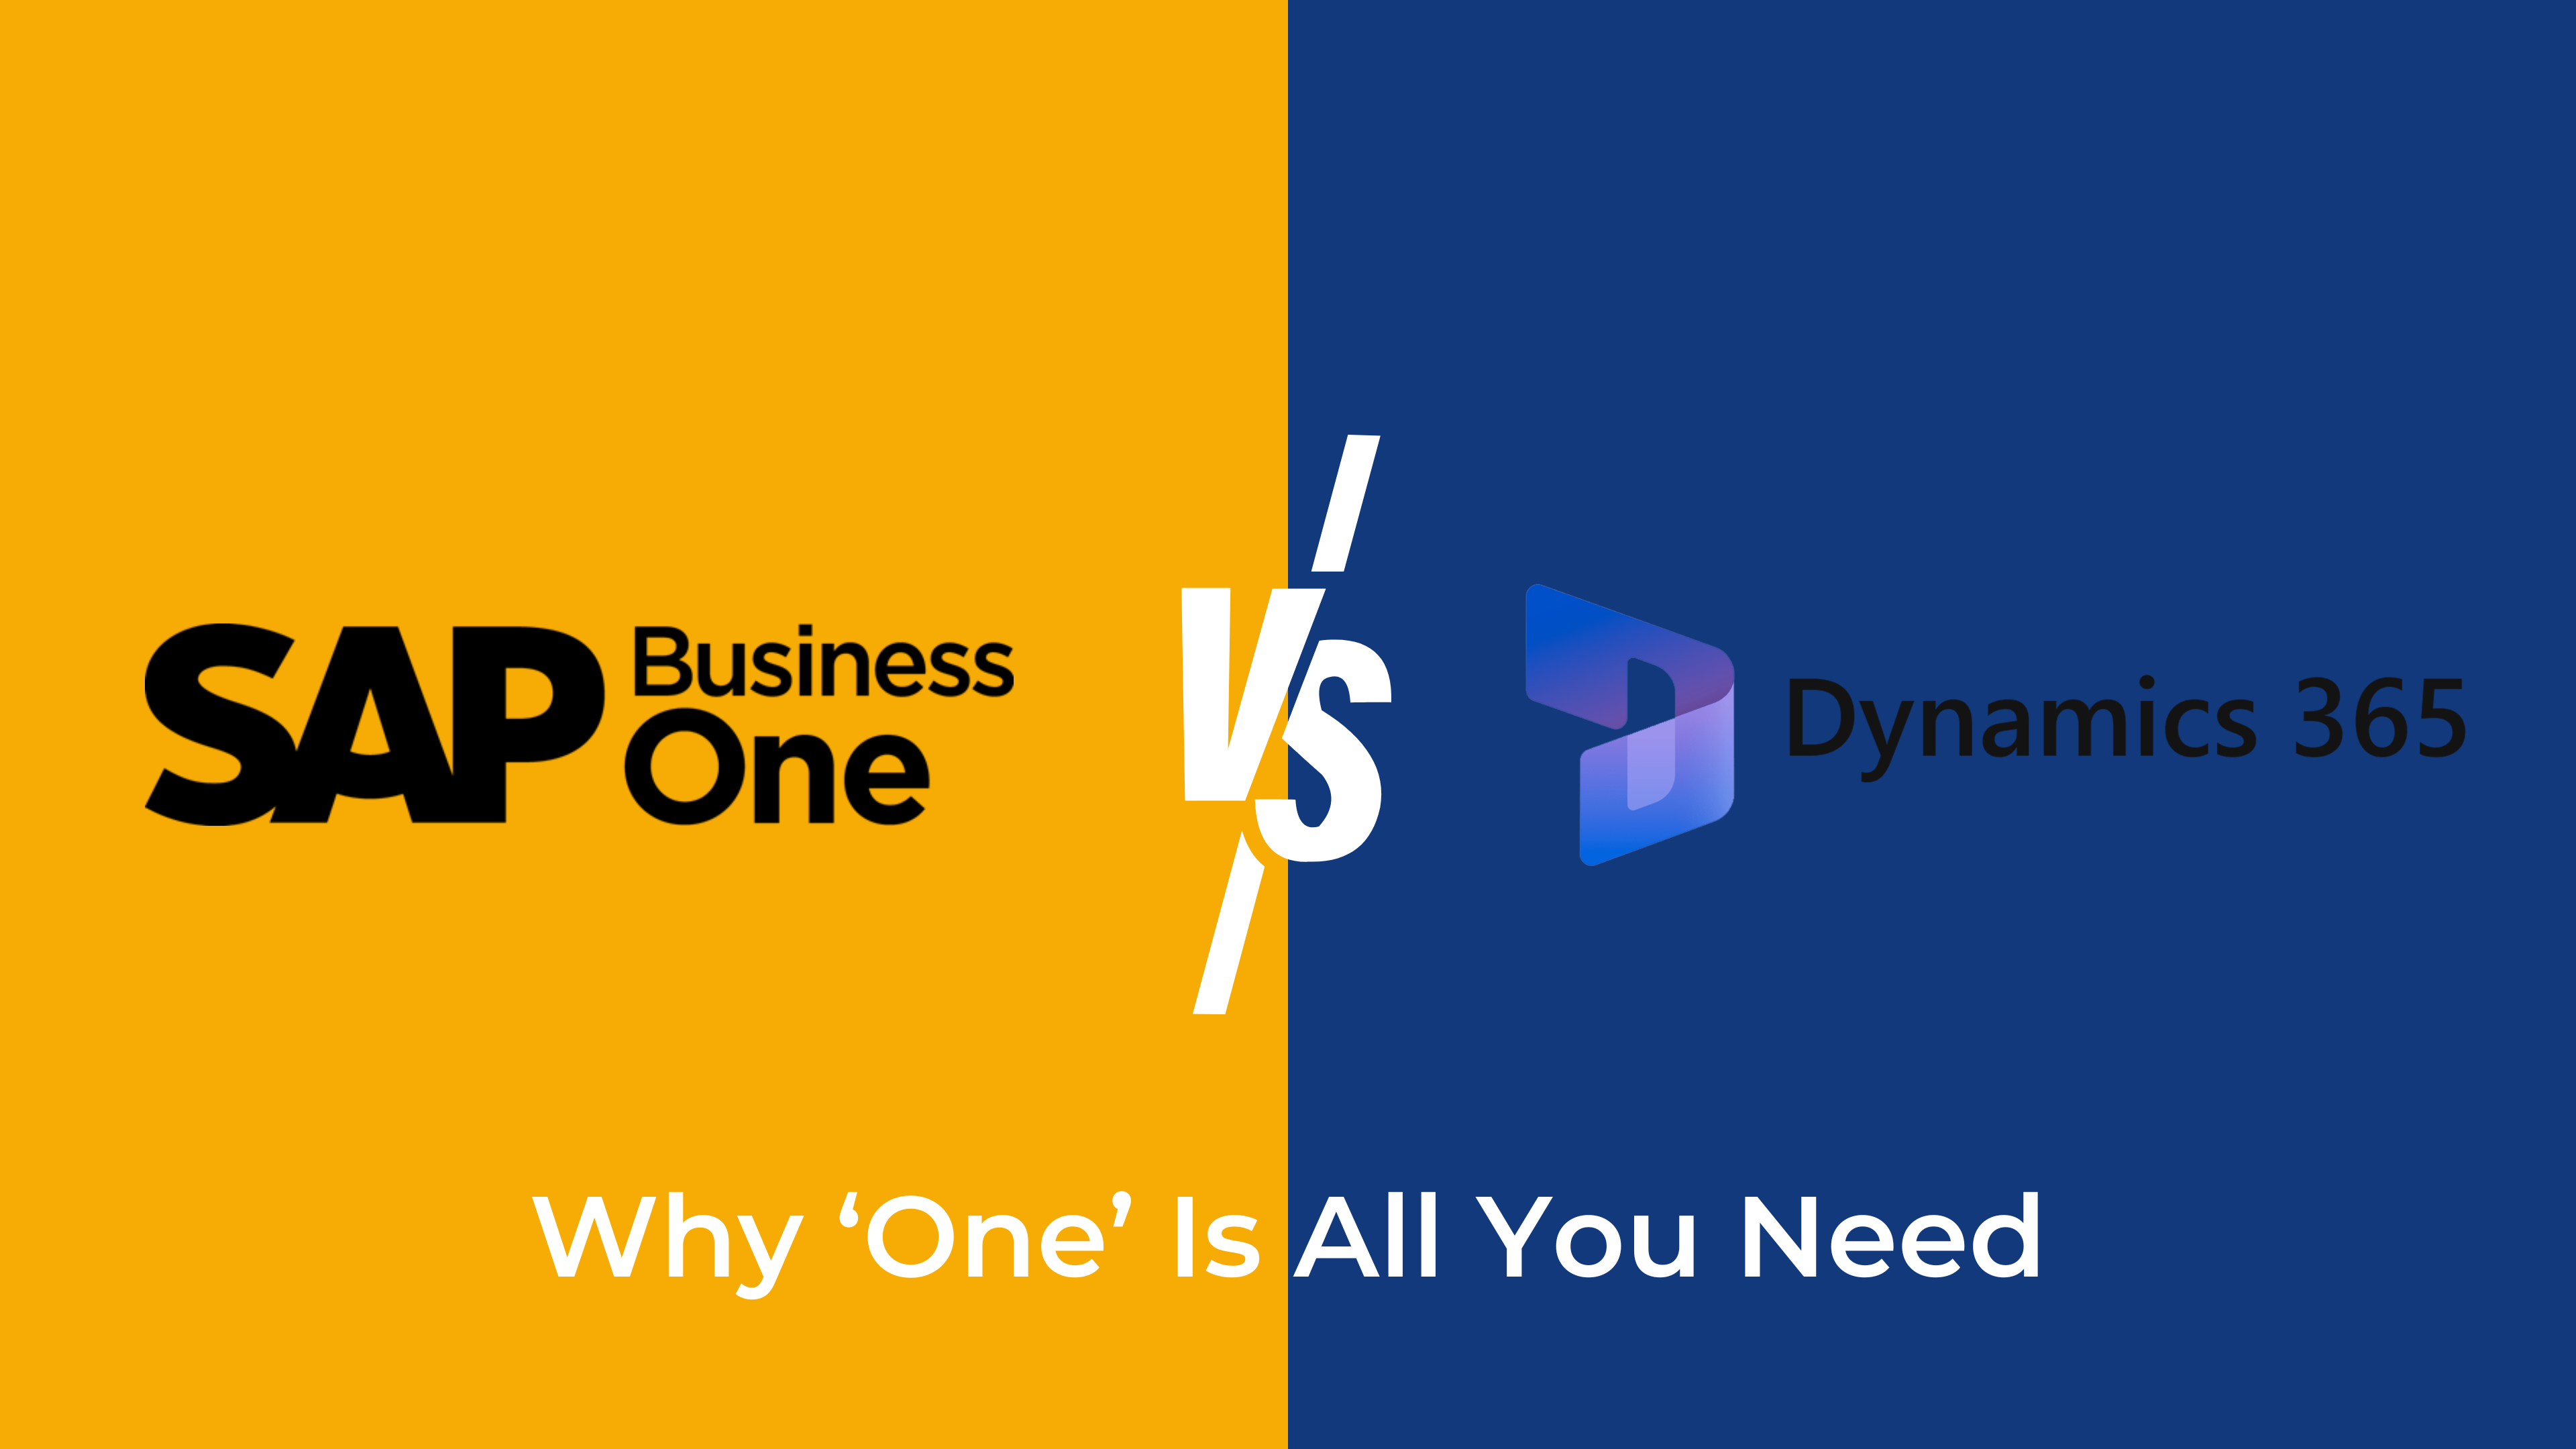 dynamics vs sap business one